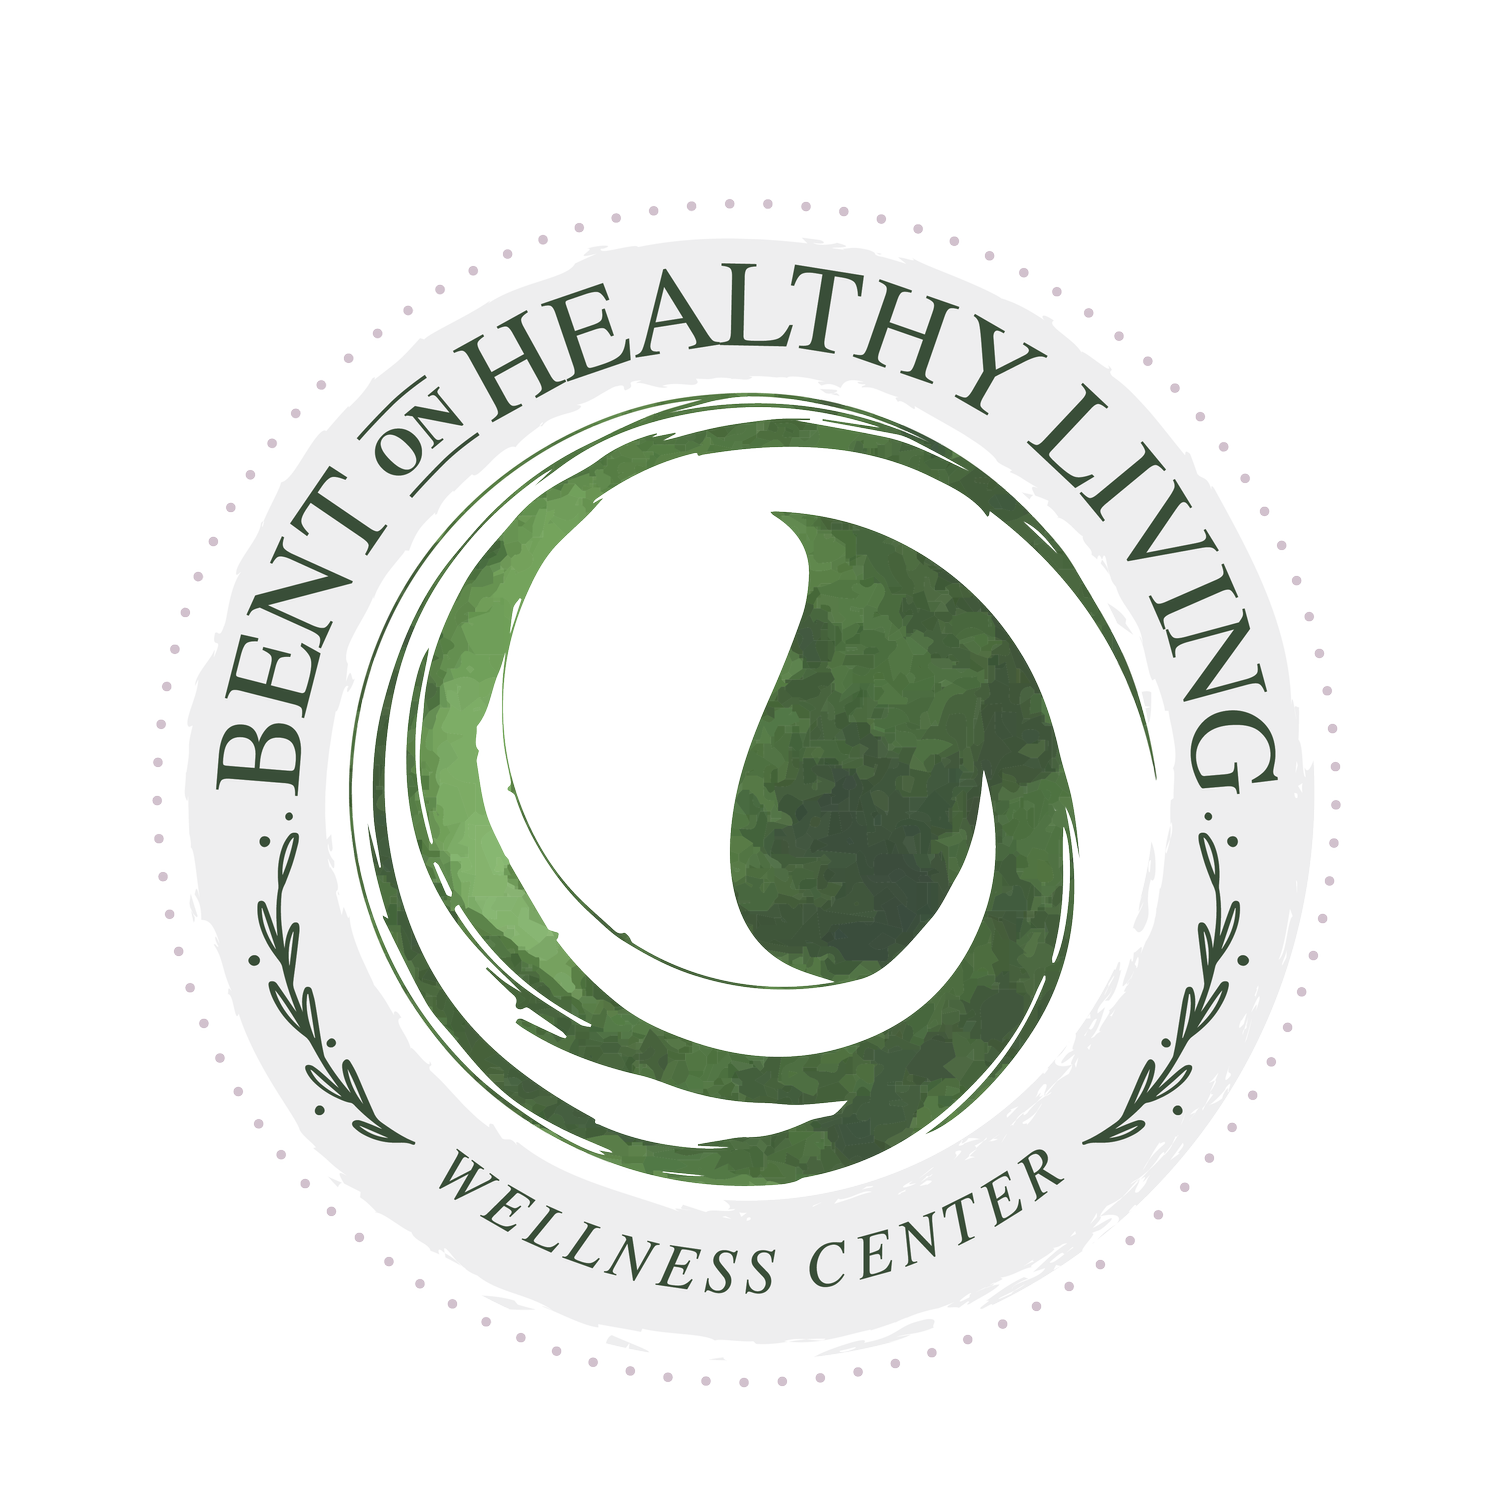 Bent on Healthy Living Wellness Center